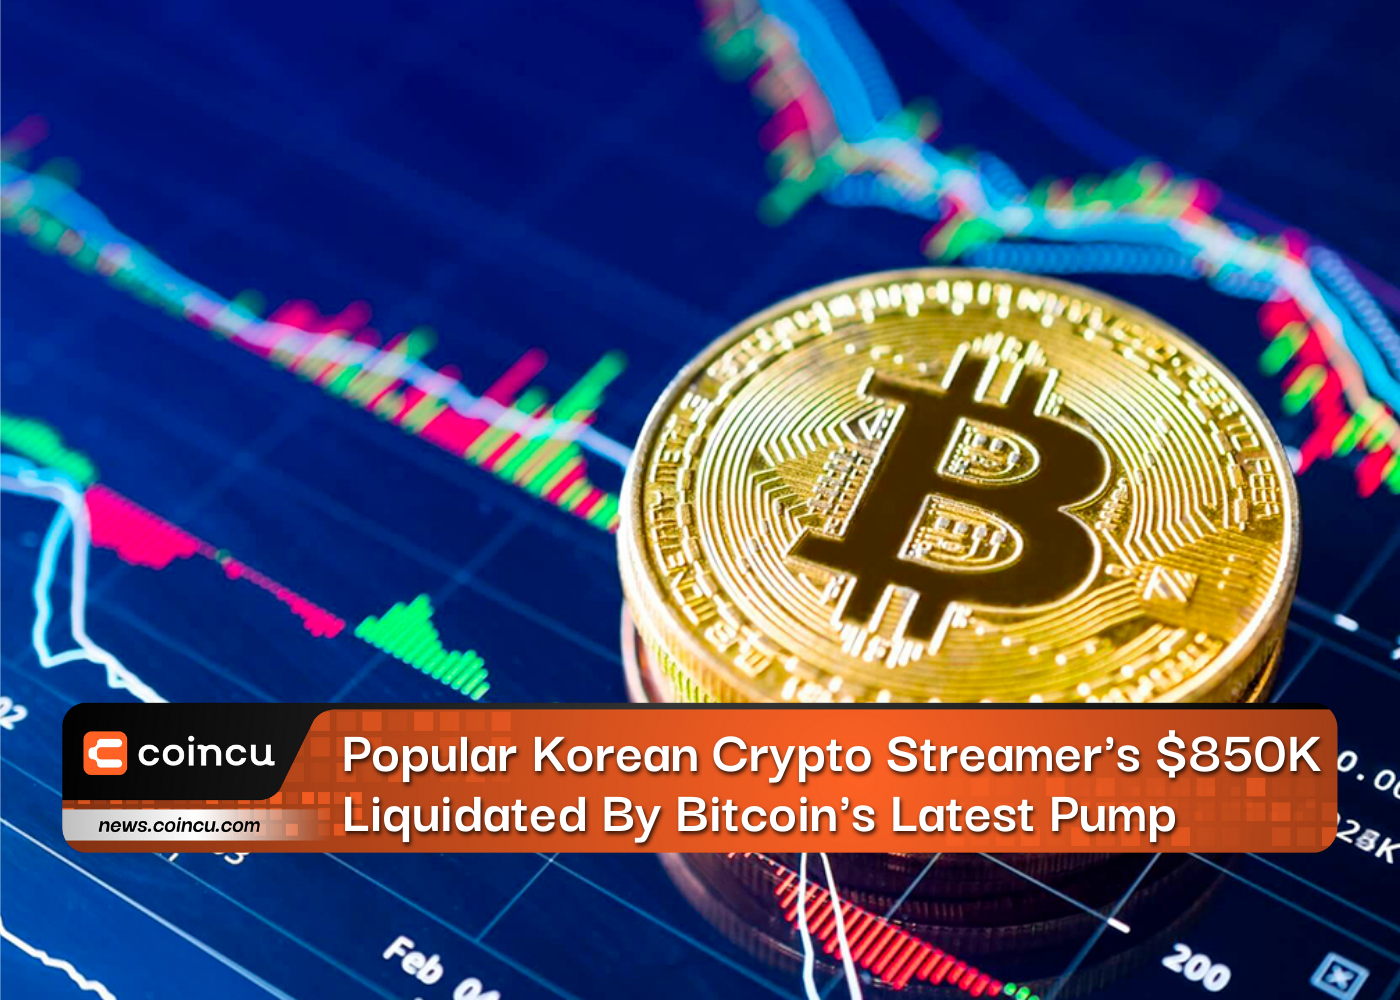 Popular Korean Crypto Streamer's $850K Liquidated By Bitcoin's Latest Pump